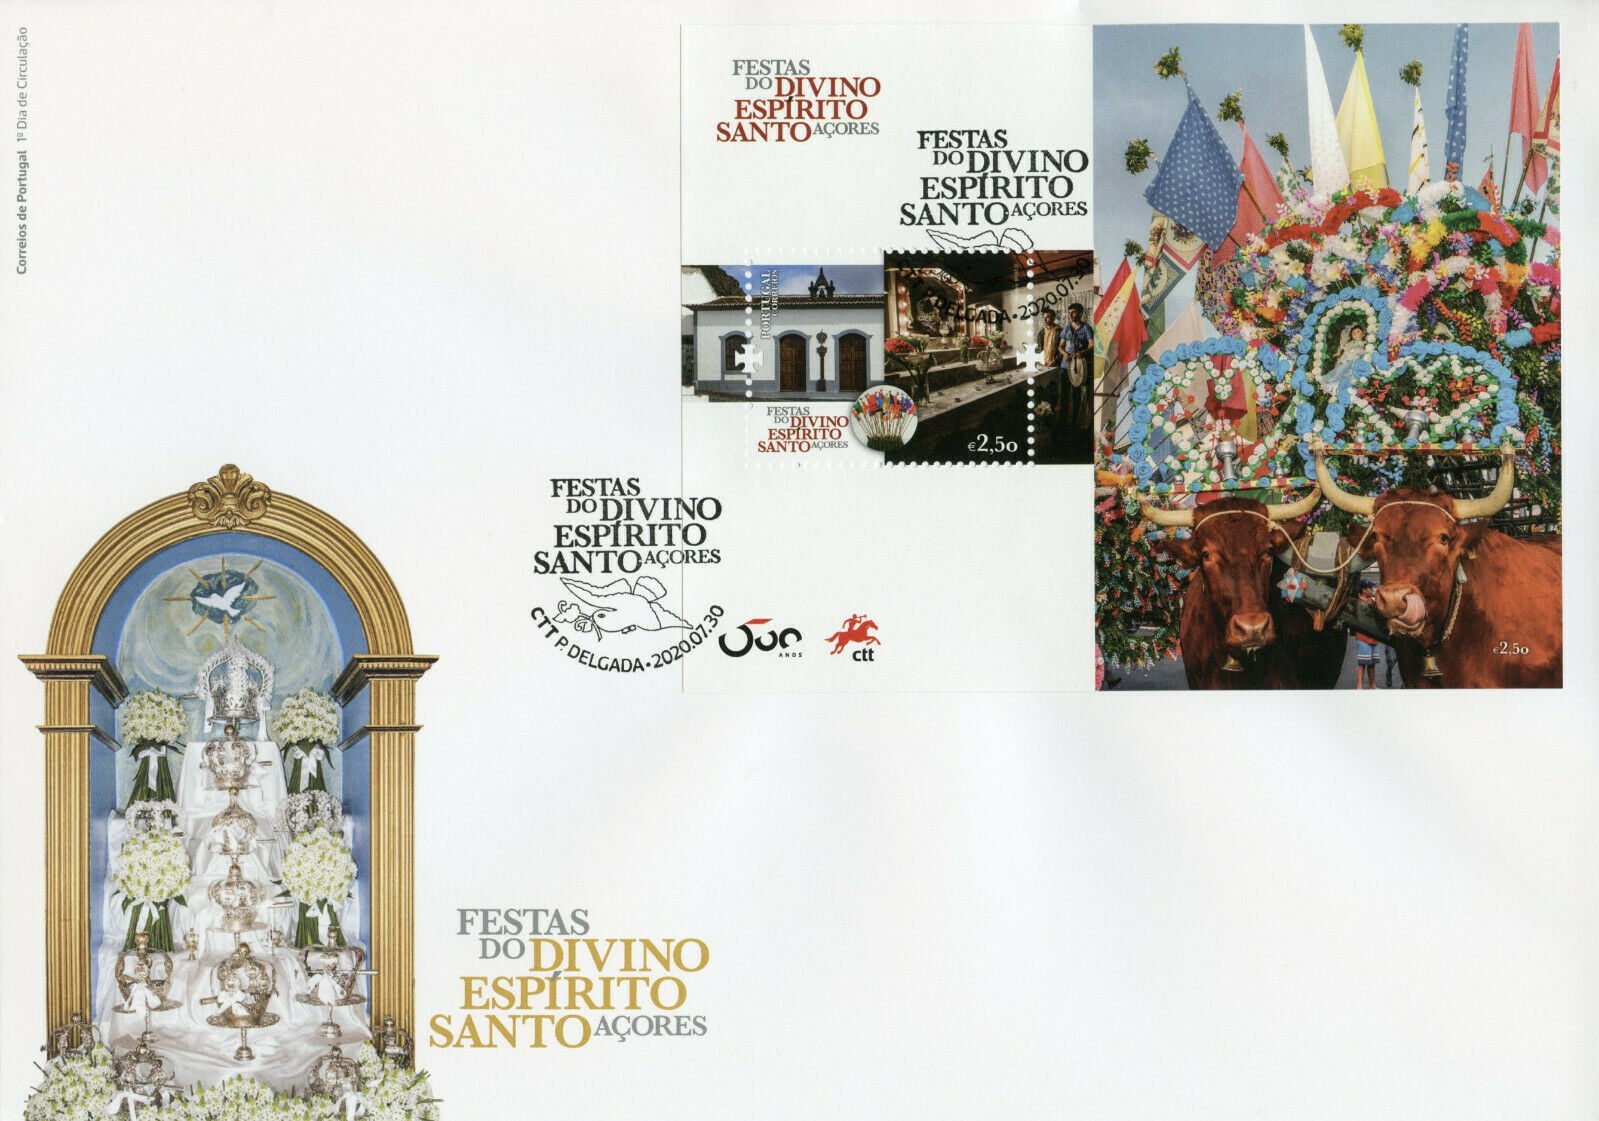 Portugal Cultures Stamps 2020 FDC Festivals Divino Espirito Santo Azores 1v M/S